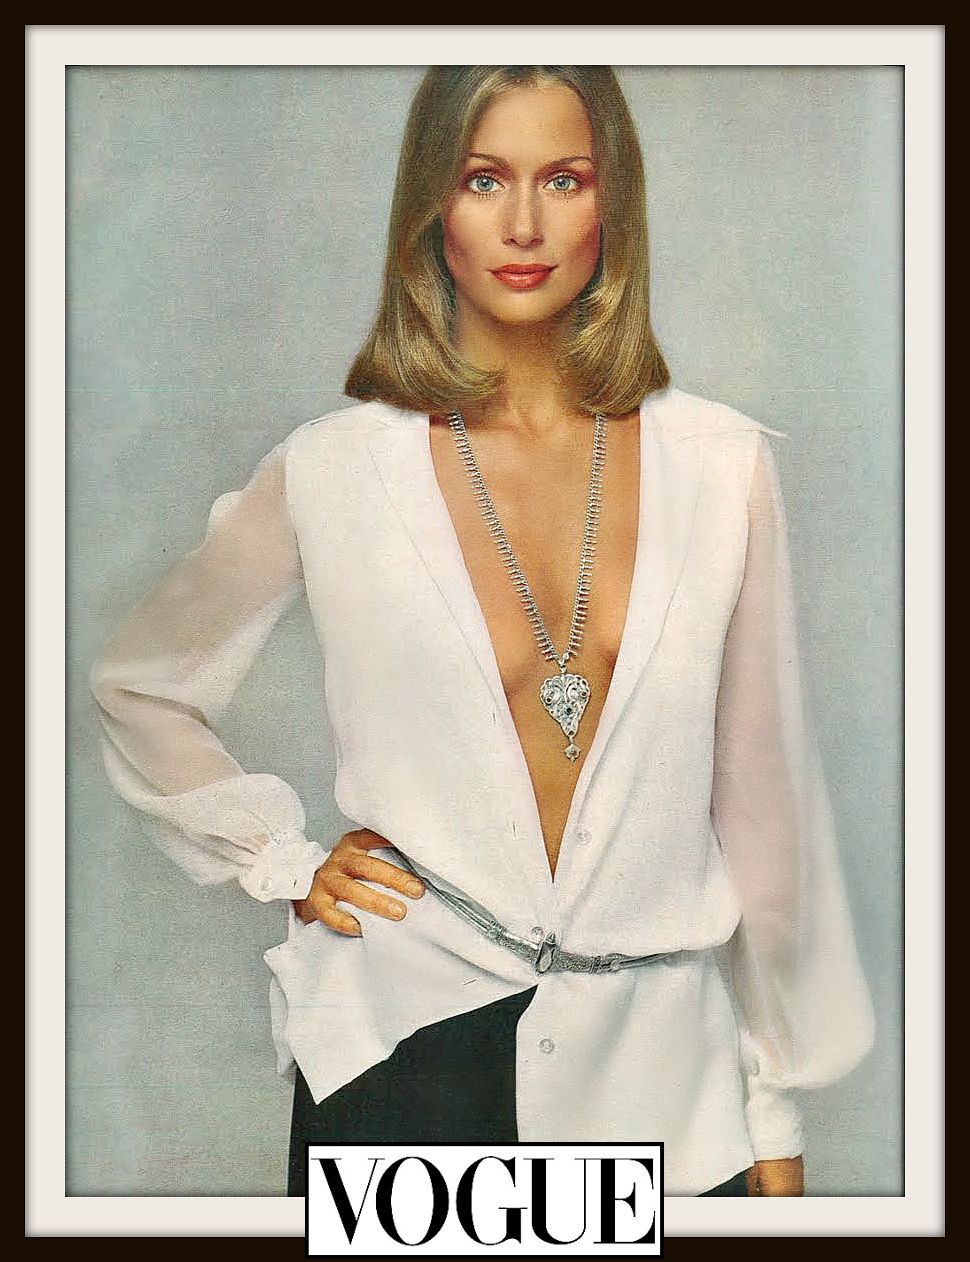 richard-avedon-lauren-hutton-1973-white-shirt-vogue-f.jpg